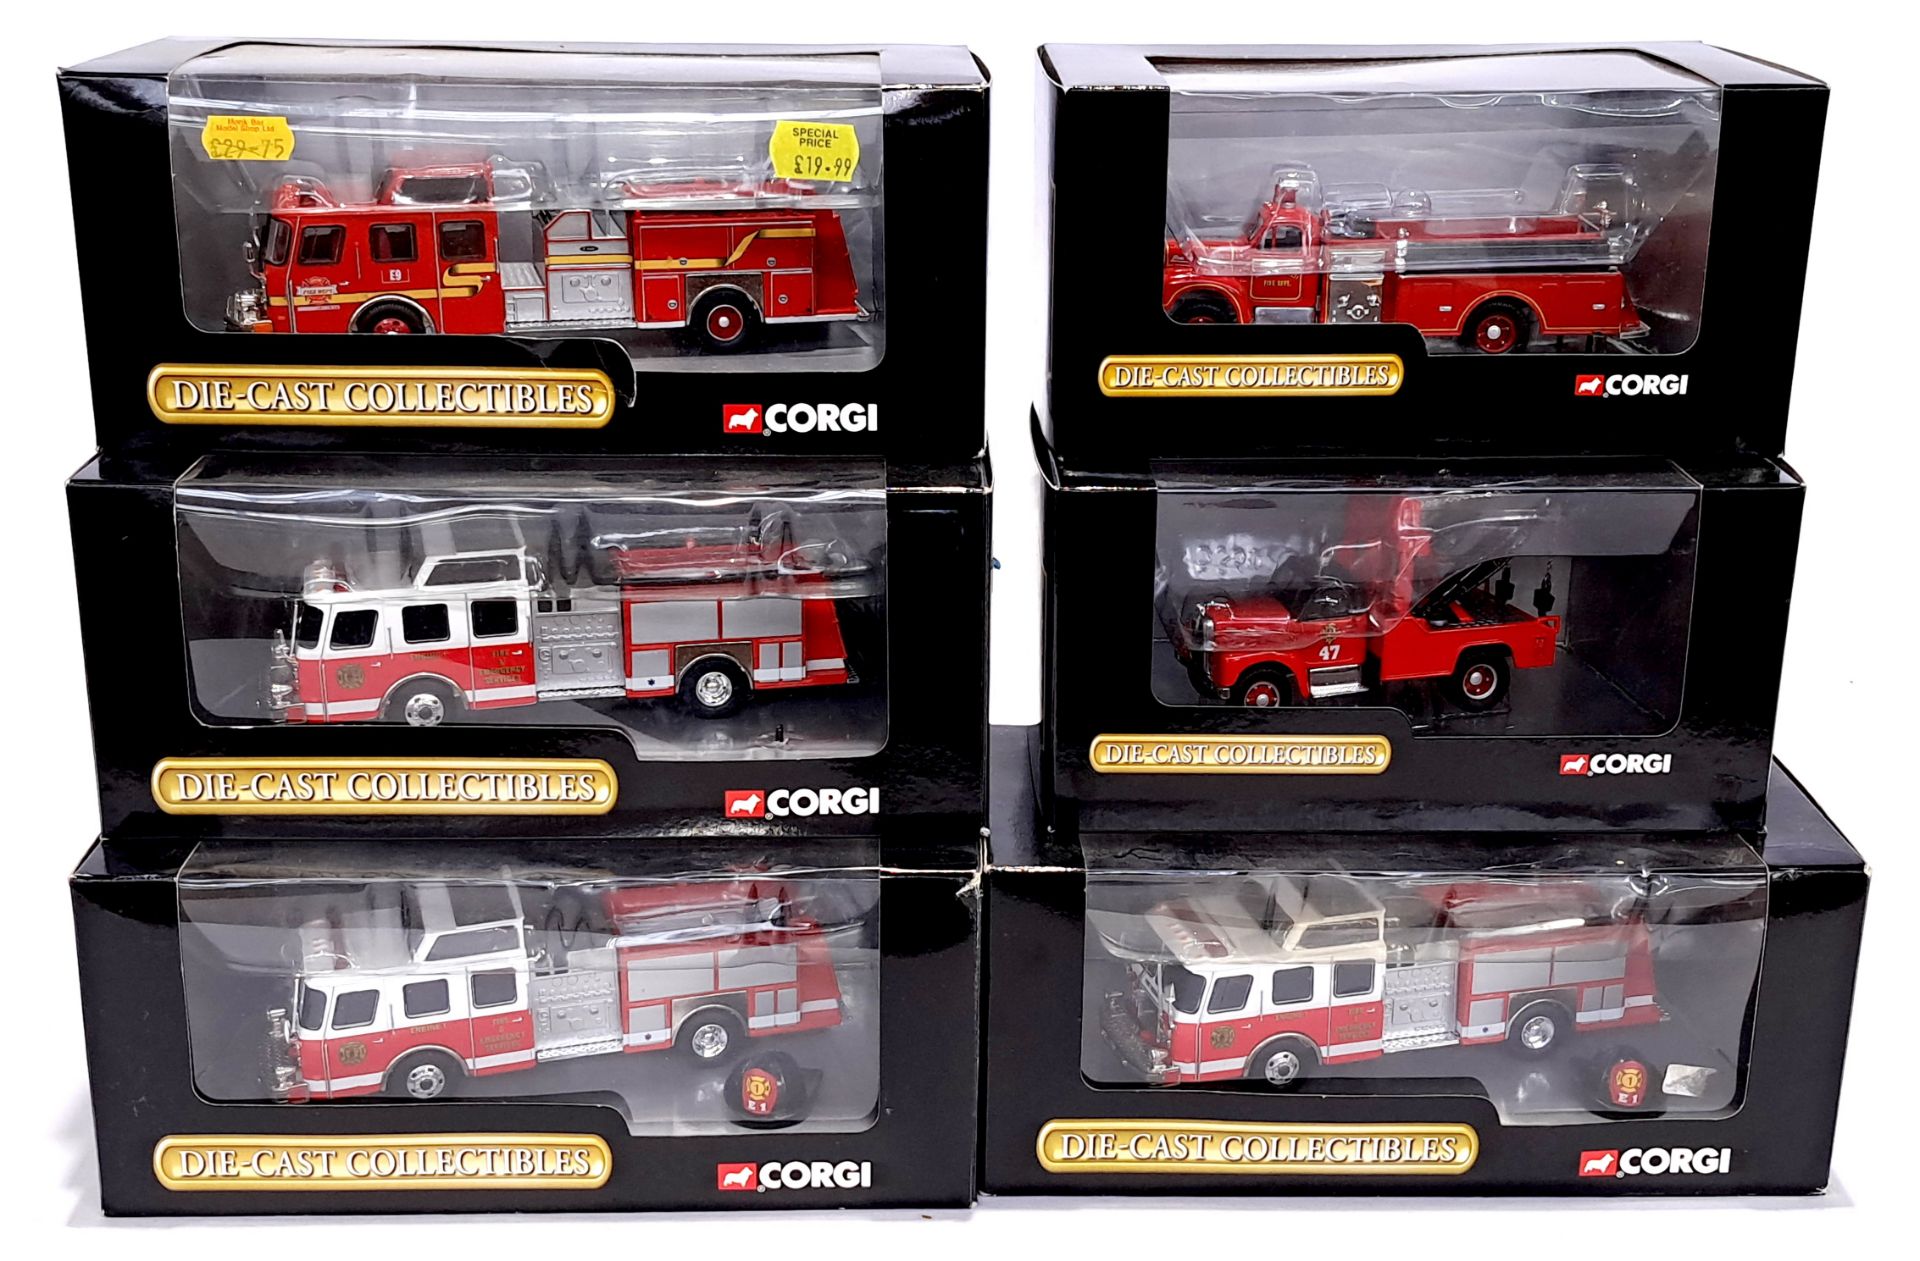 Corgi, a boxed 1:50 scale Fire Service group